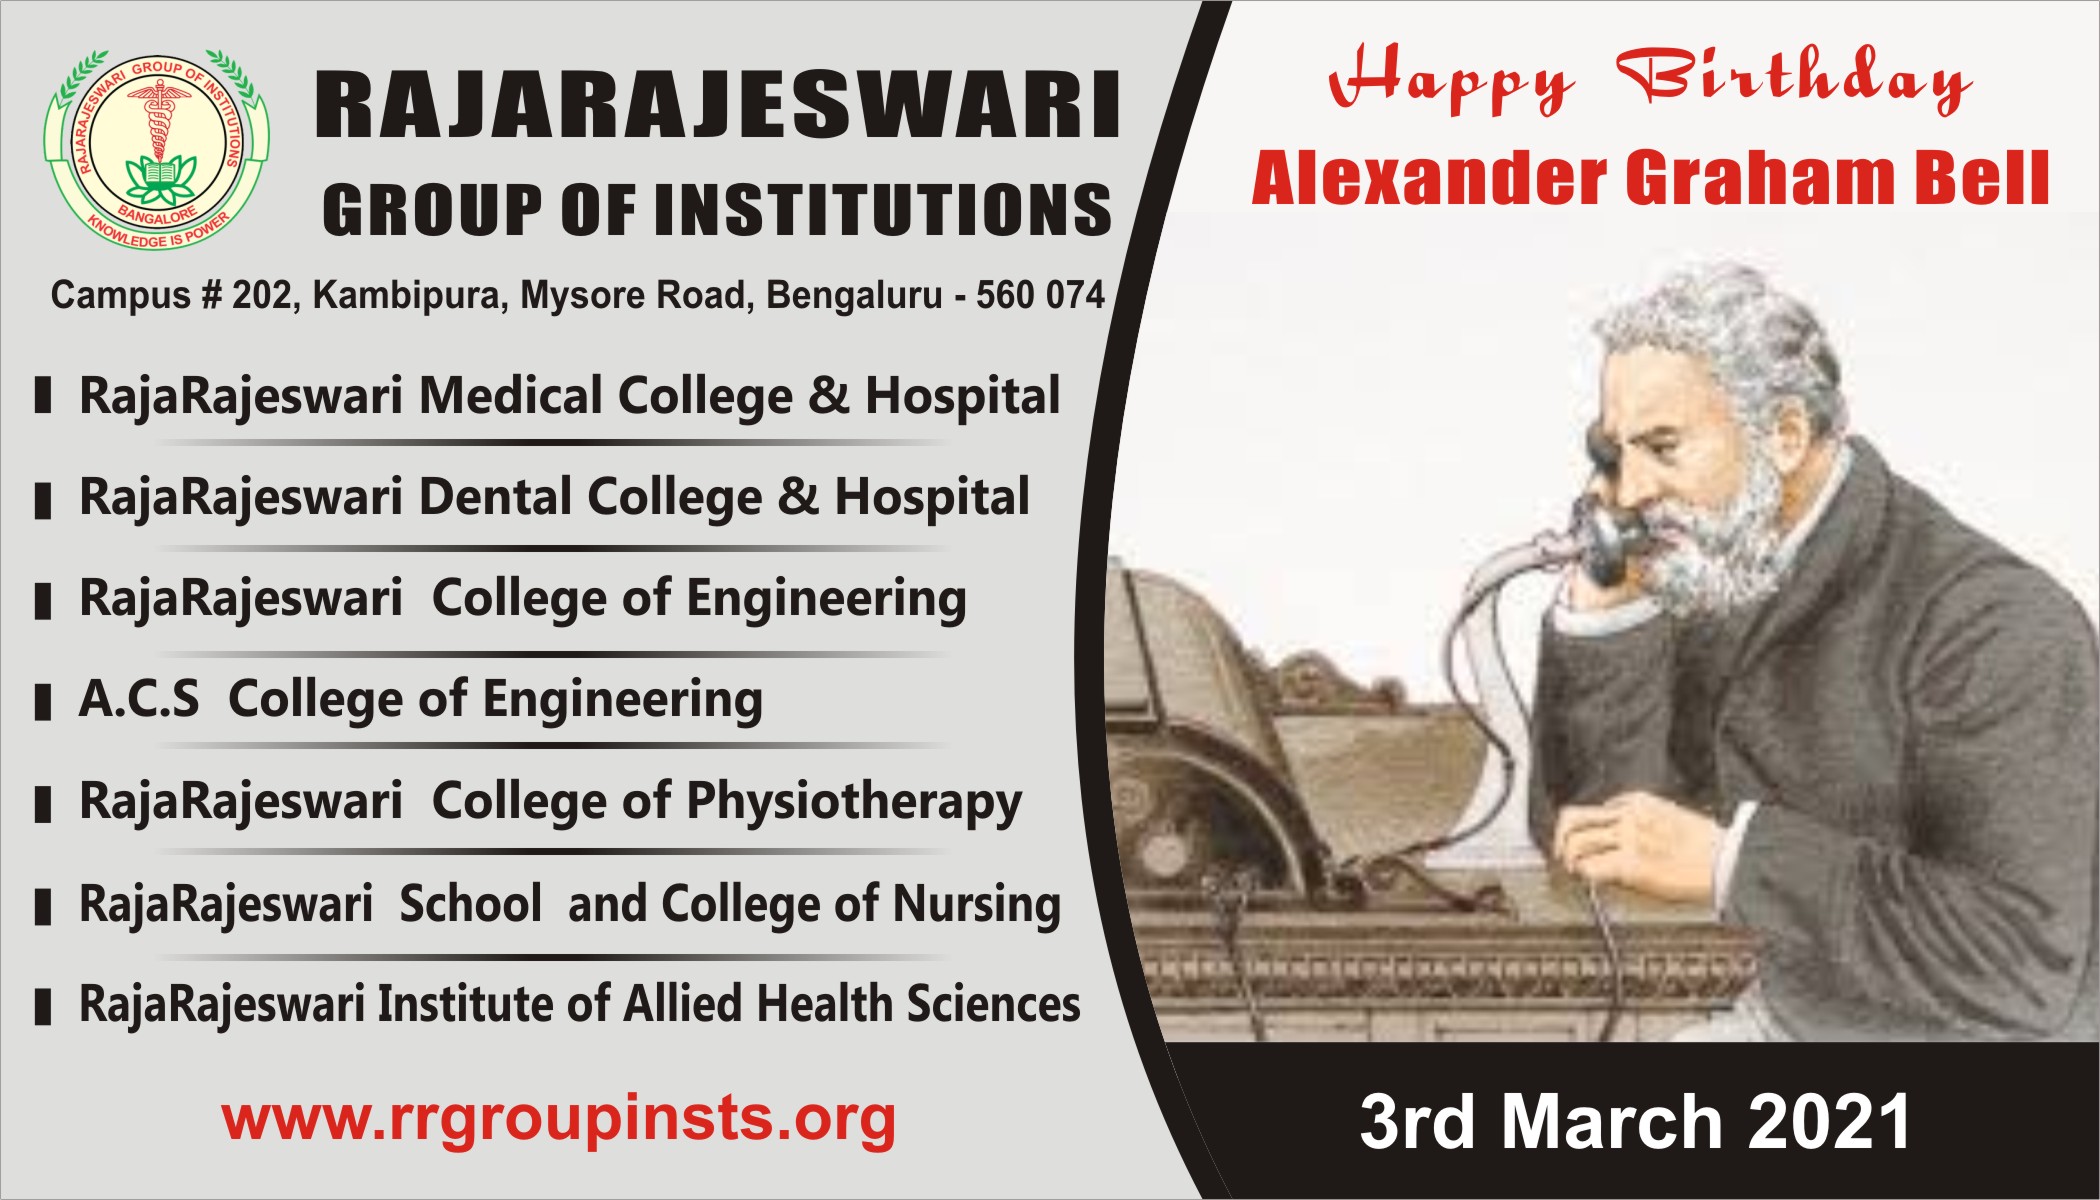 Alexander Graham Bell's Birthday | Rajarajeswari College of Physiotherapy